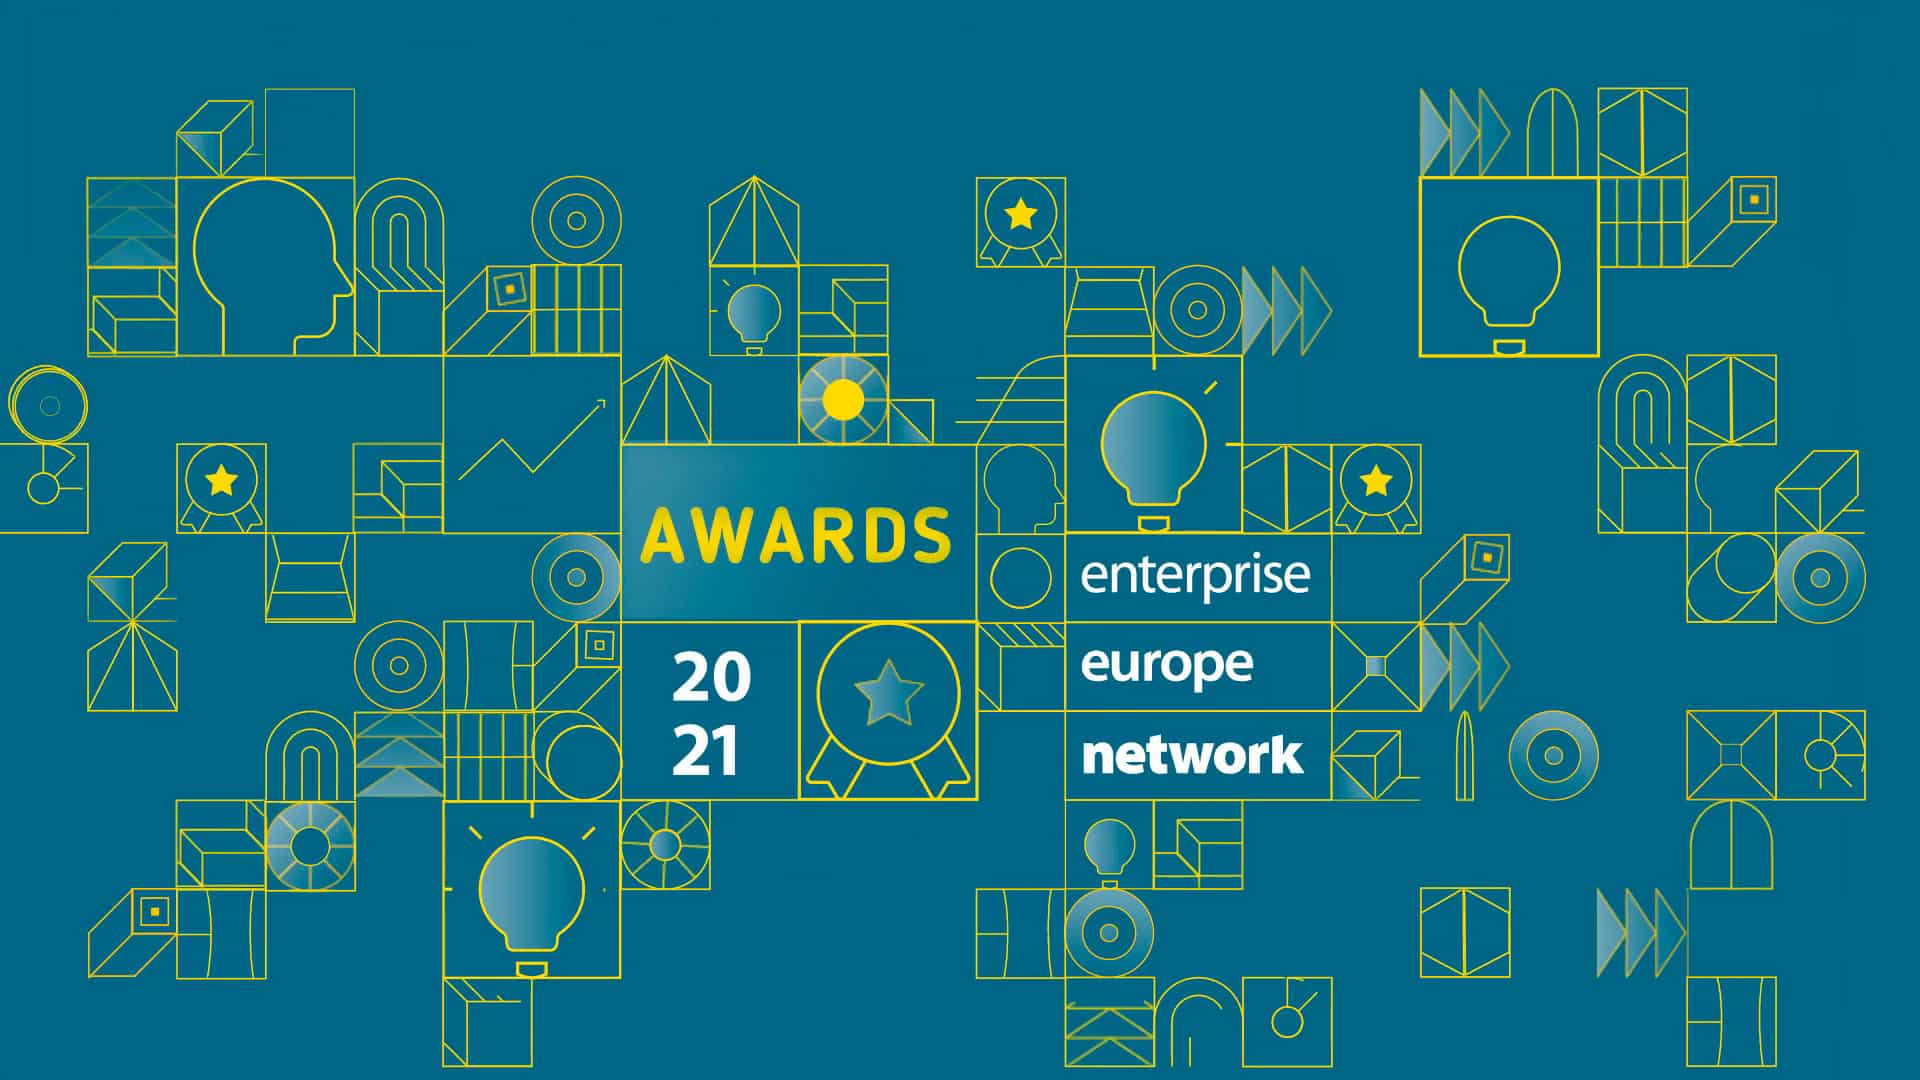 Enterprise Europe Union Awards